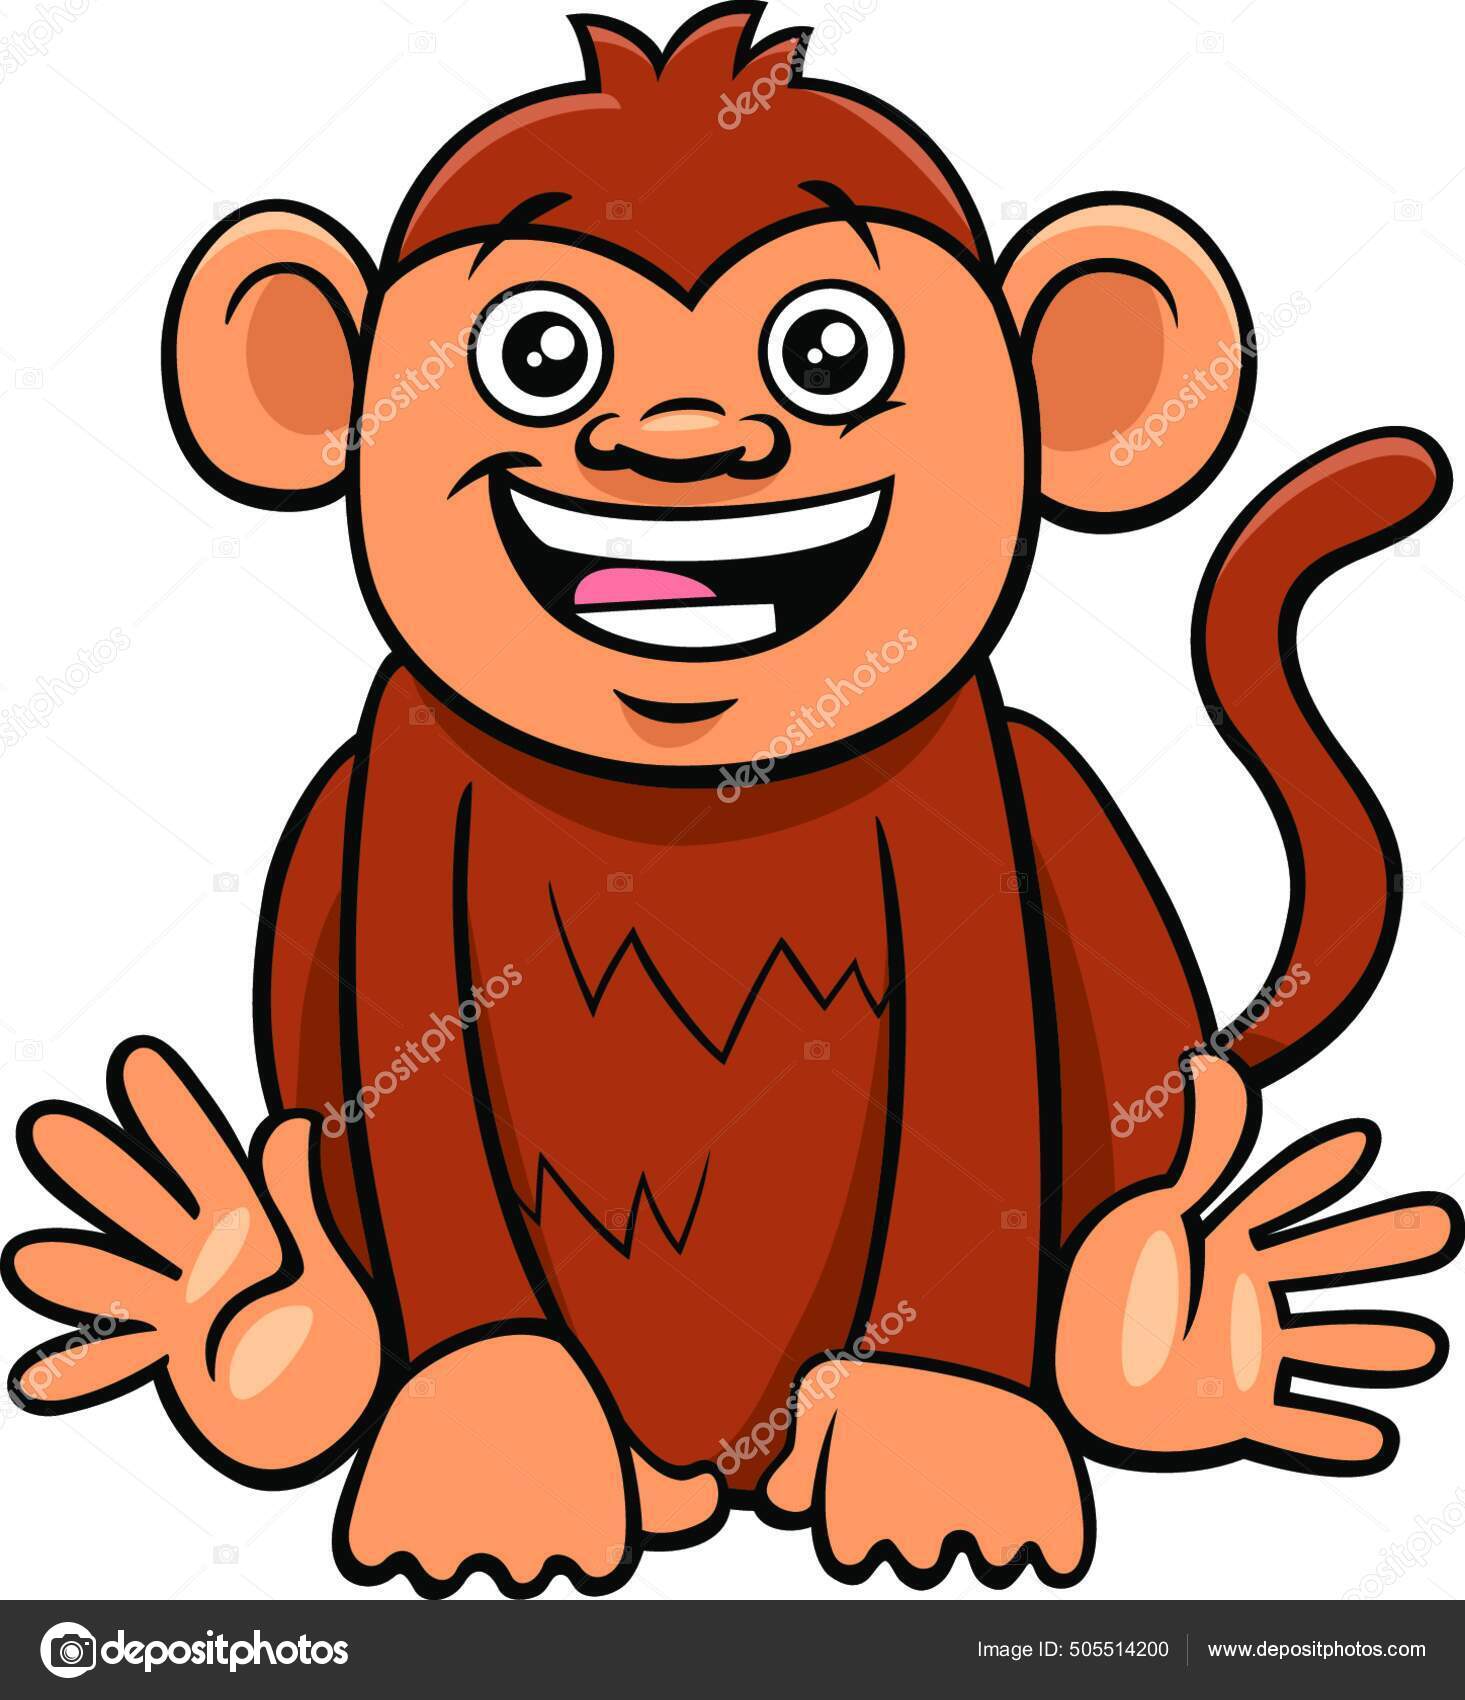 Desenho de macaco feliz bonito posando